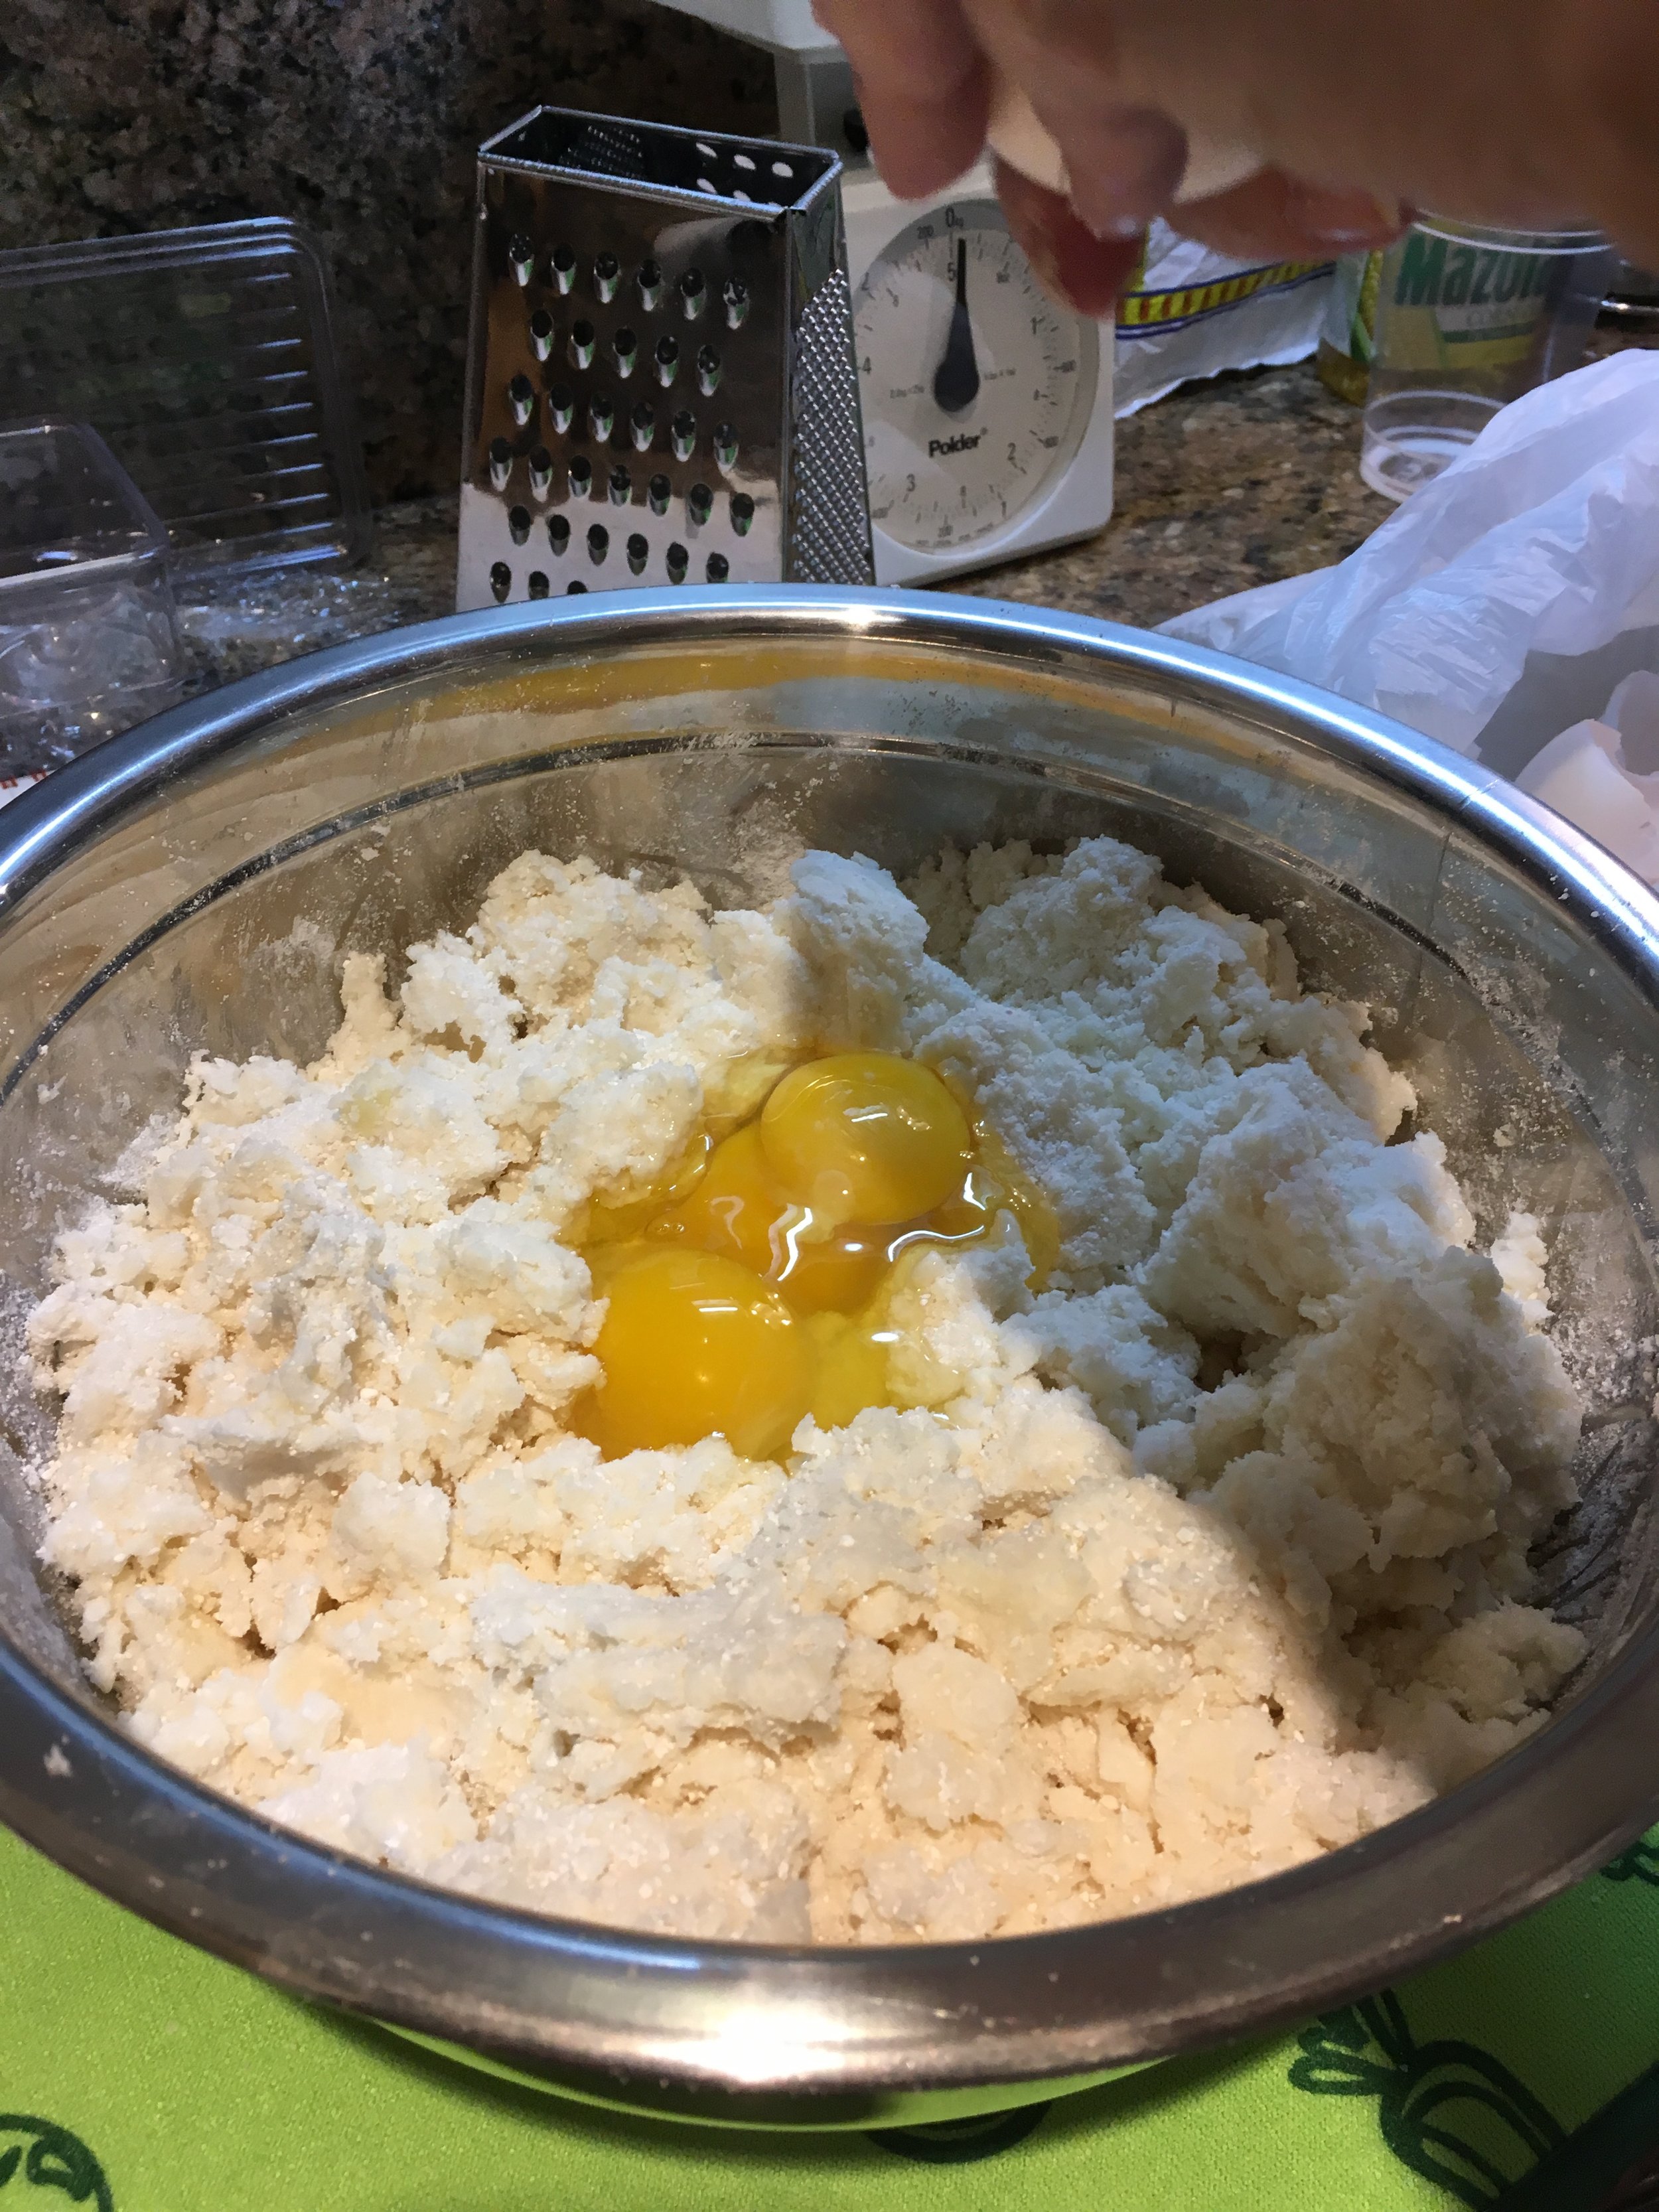 Adding the eggs